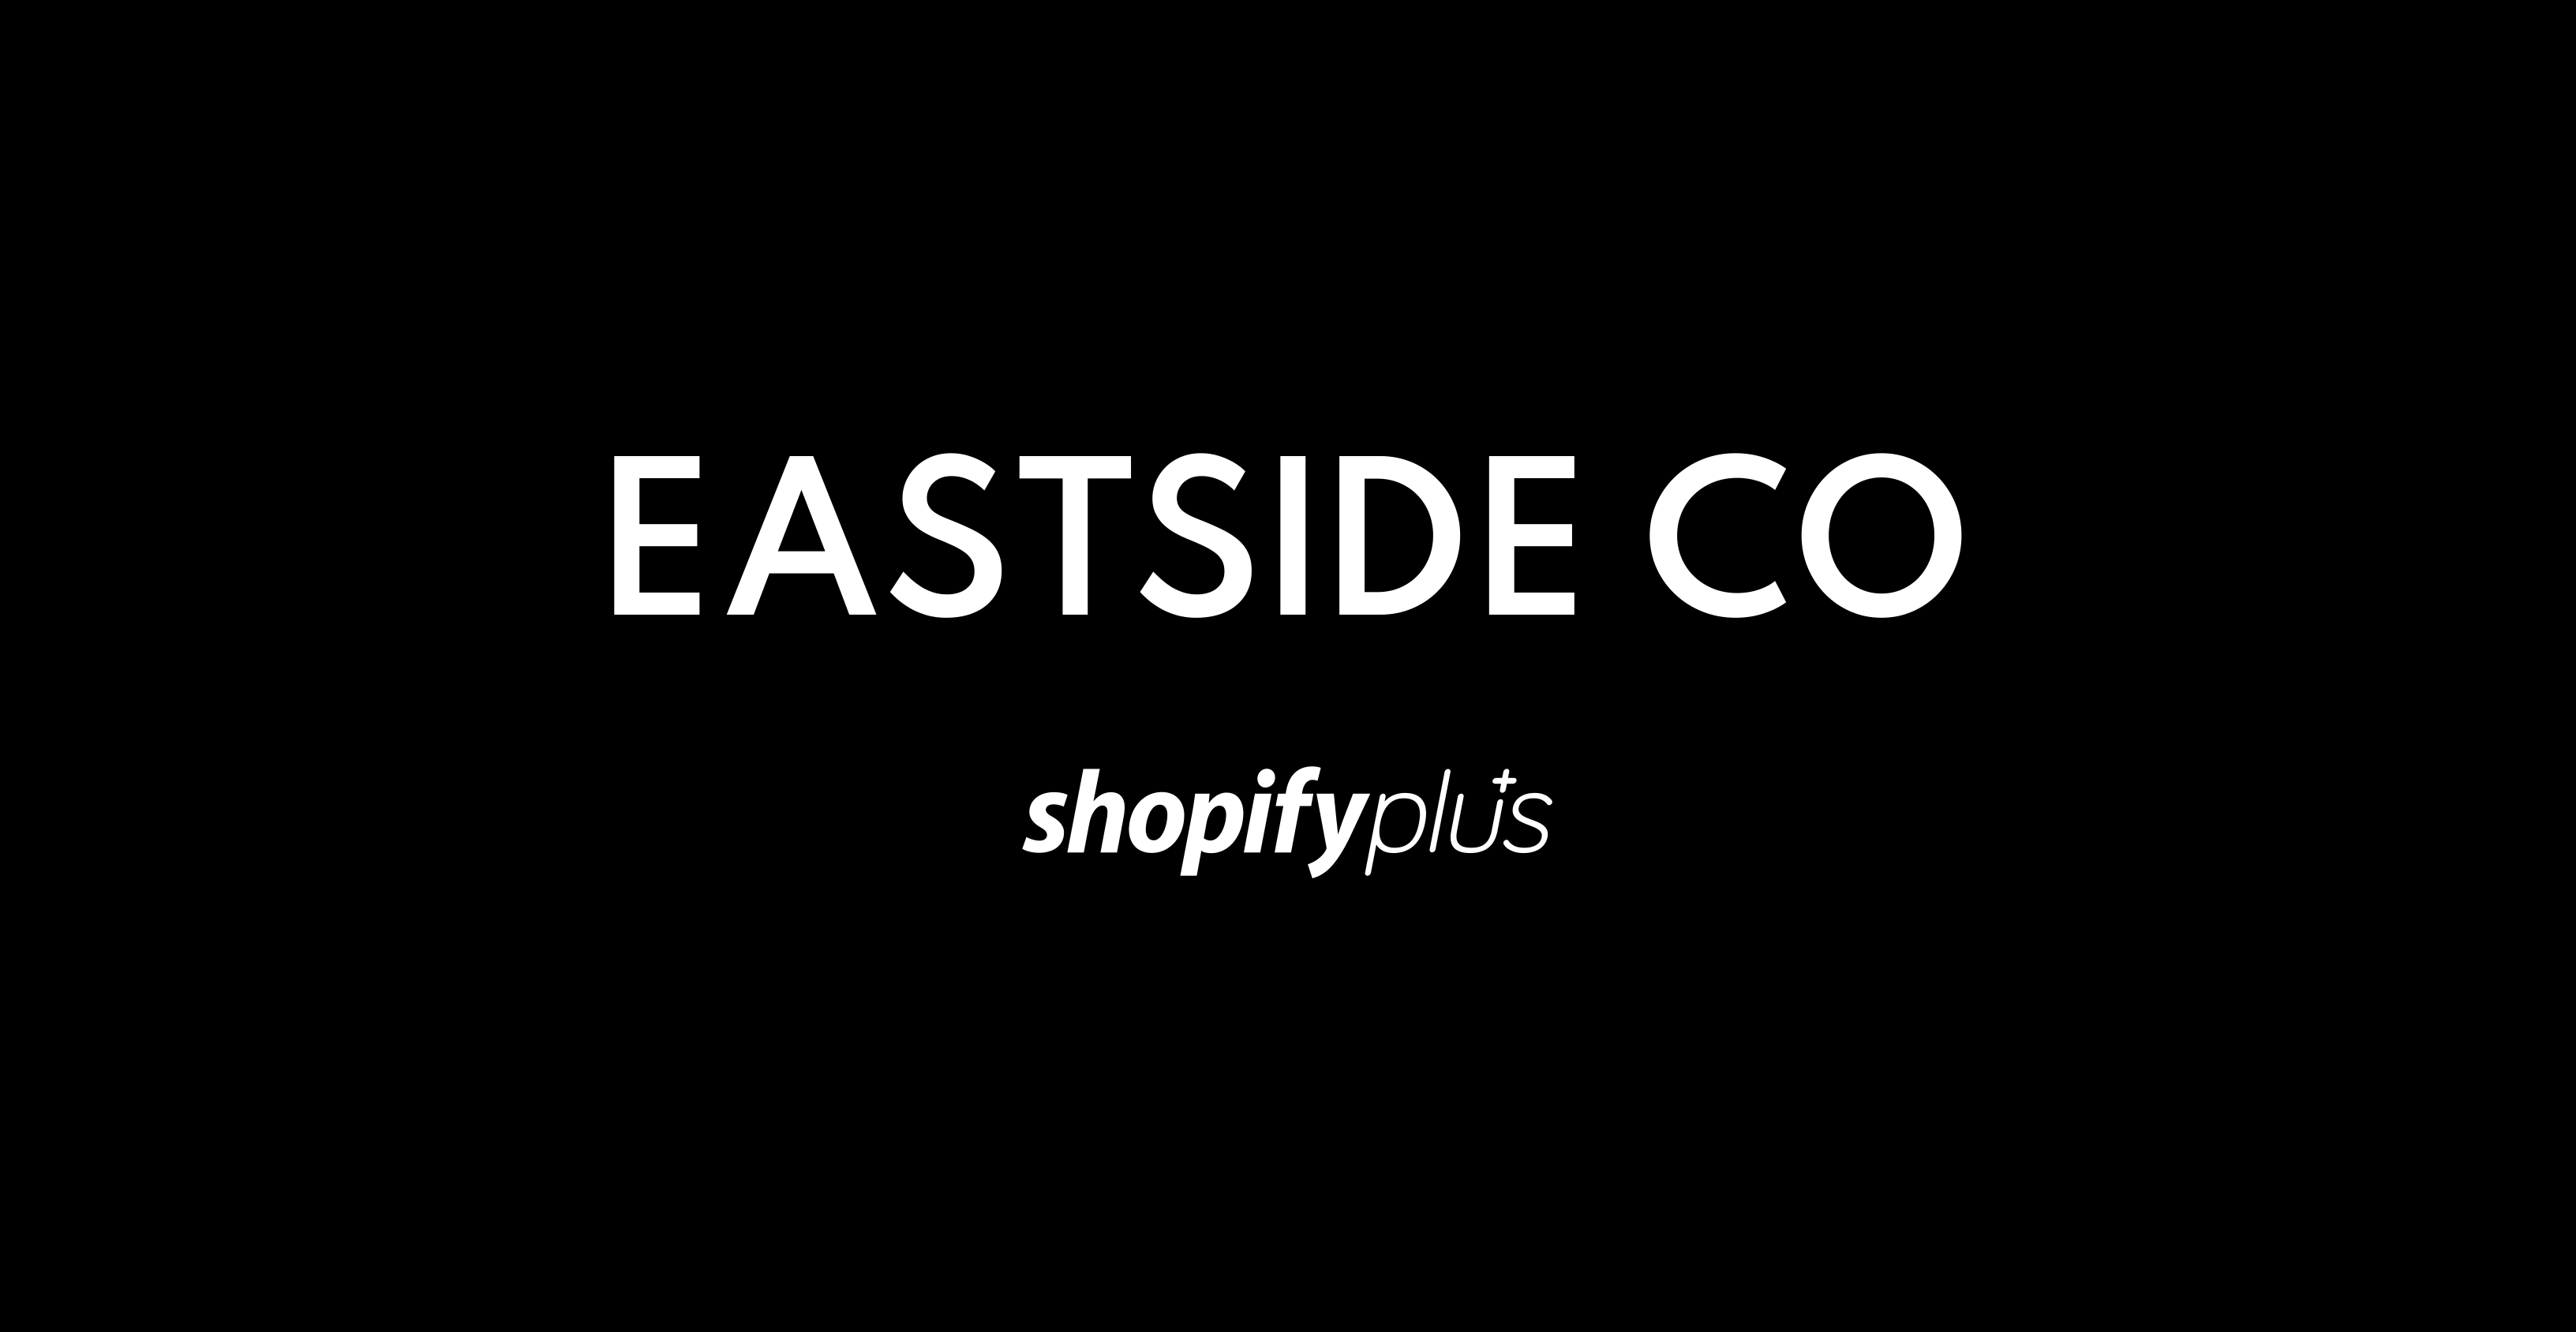 Eastside Co, Shopify Plus wordmark lockup